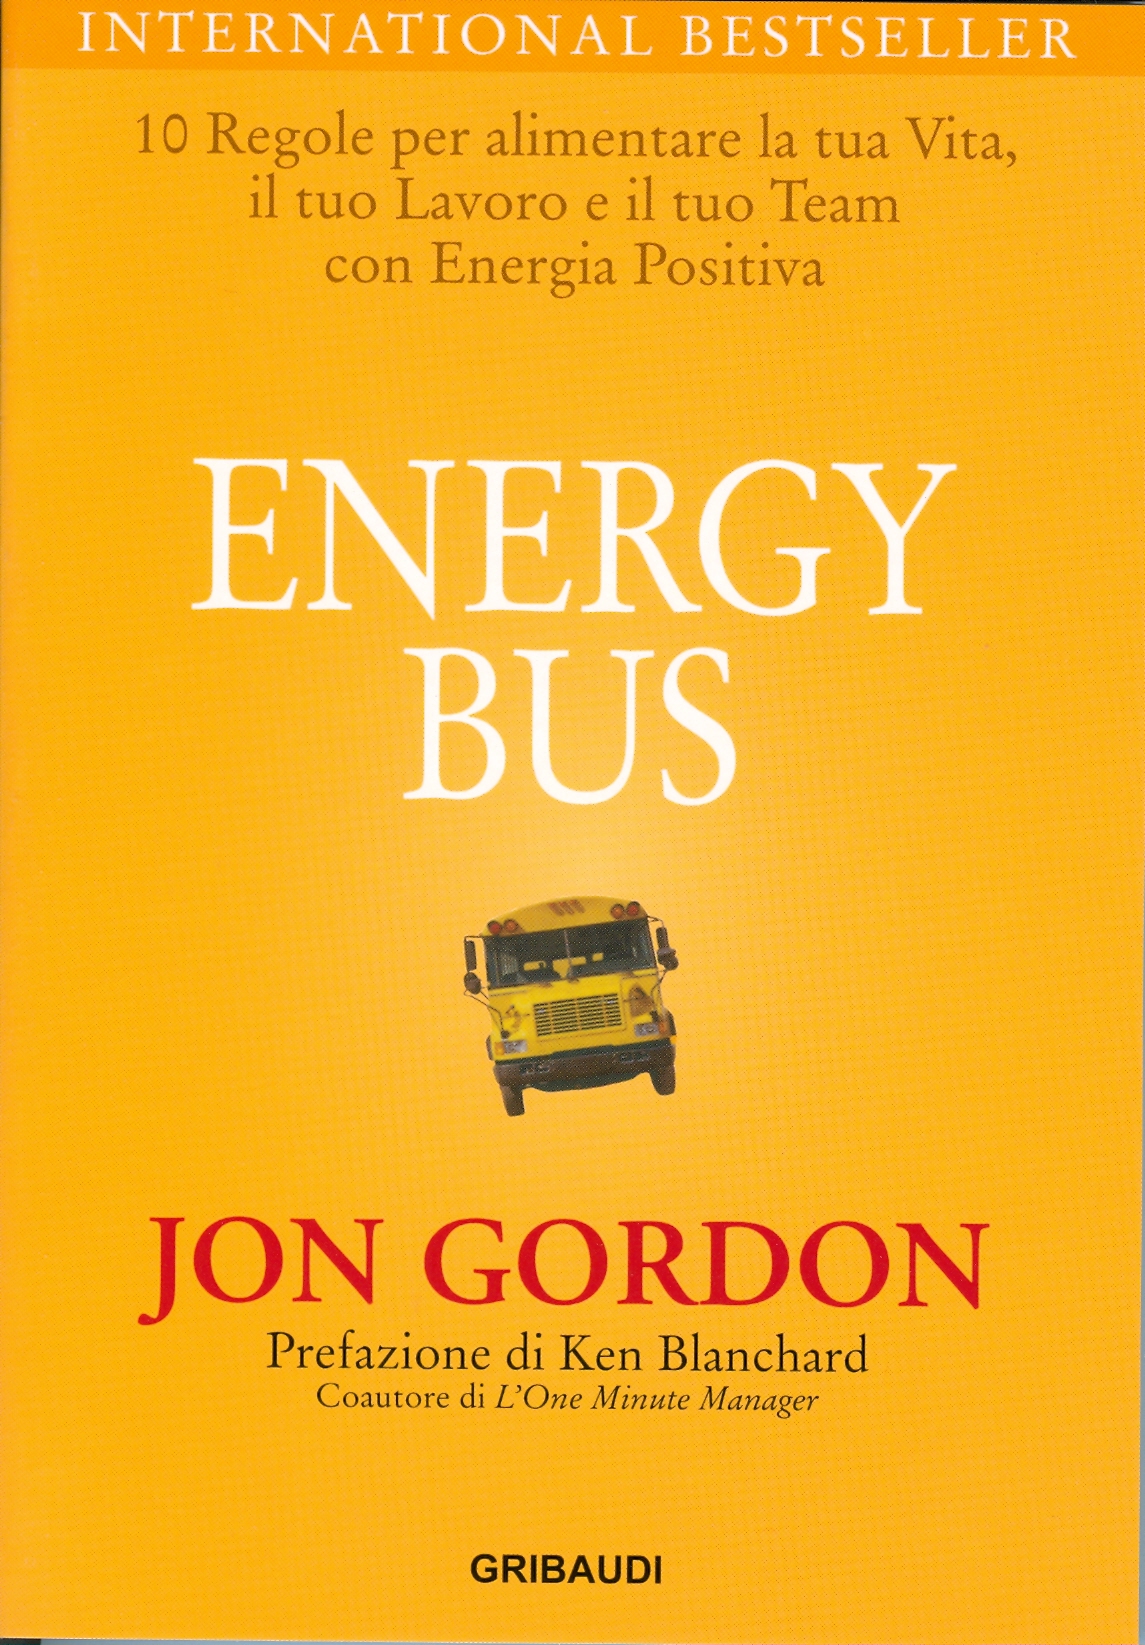 Jon Gordon - Energy Bus